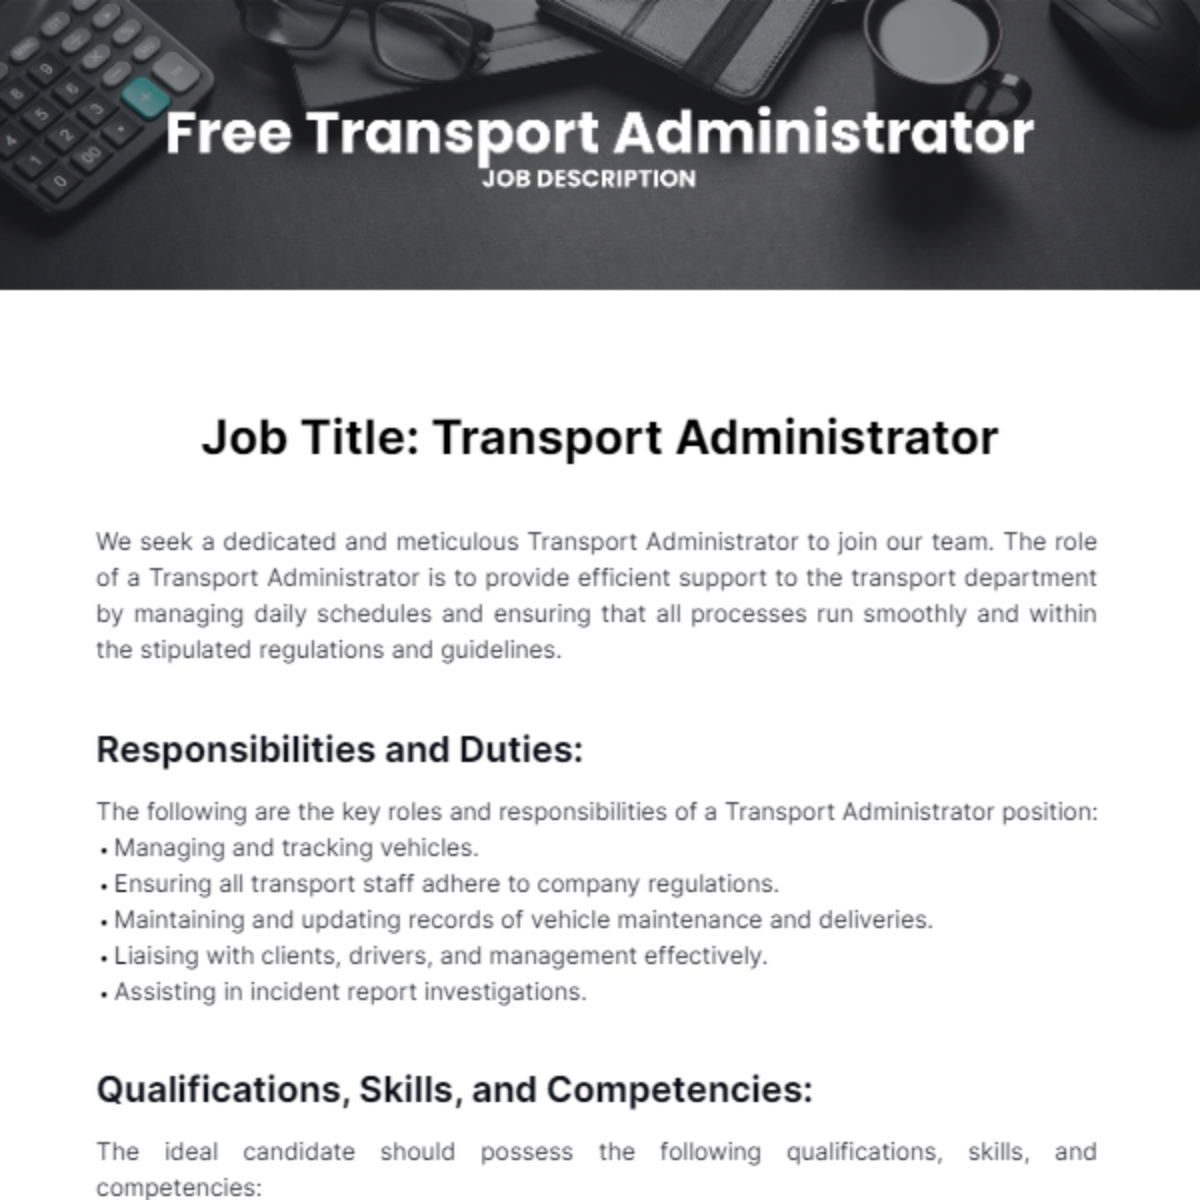 Transport Administrator Job Description Template